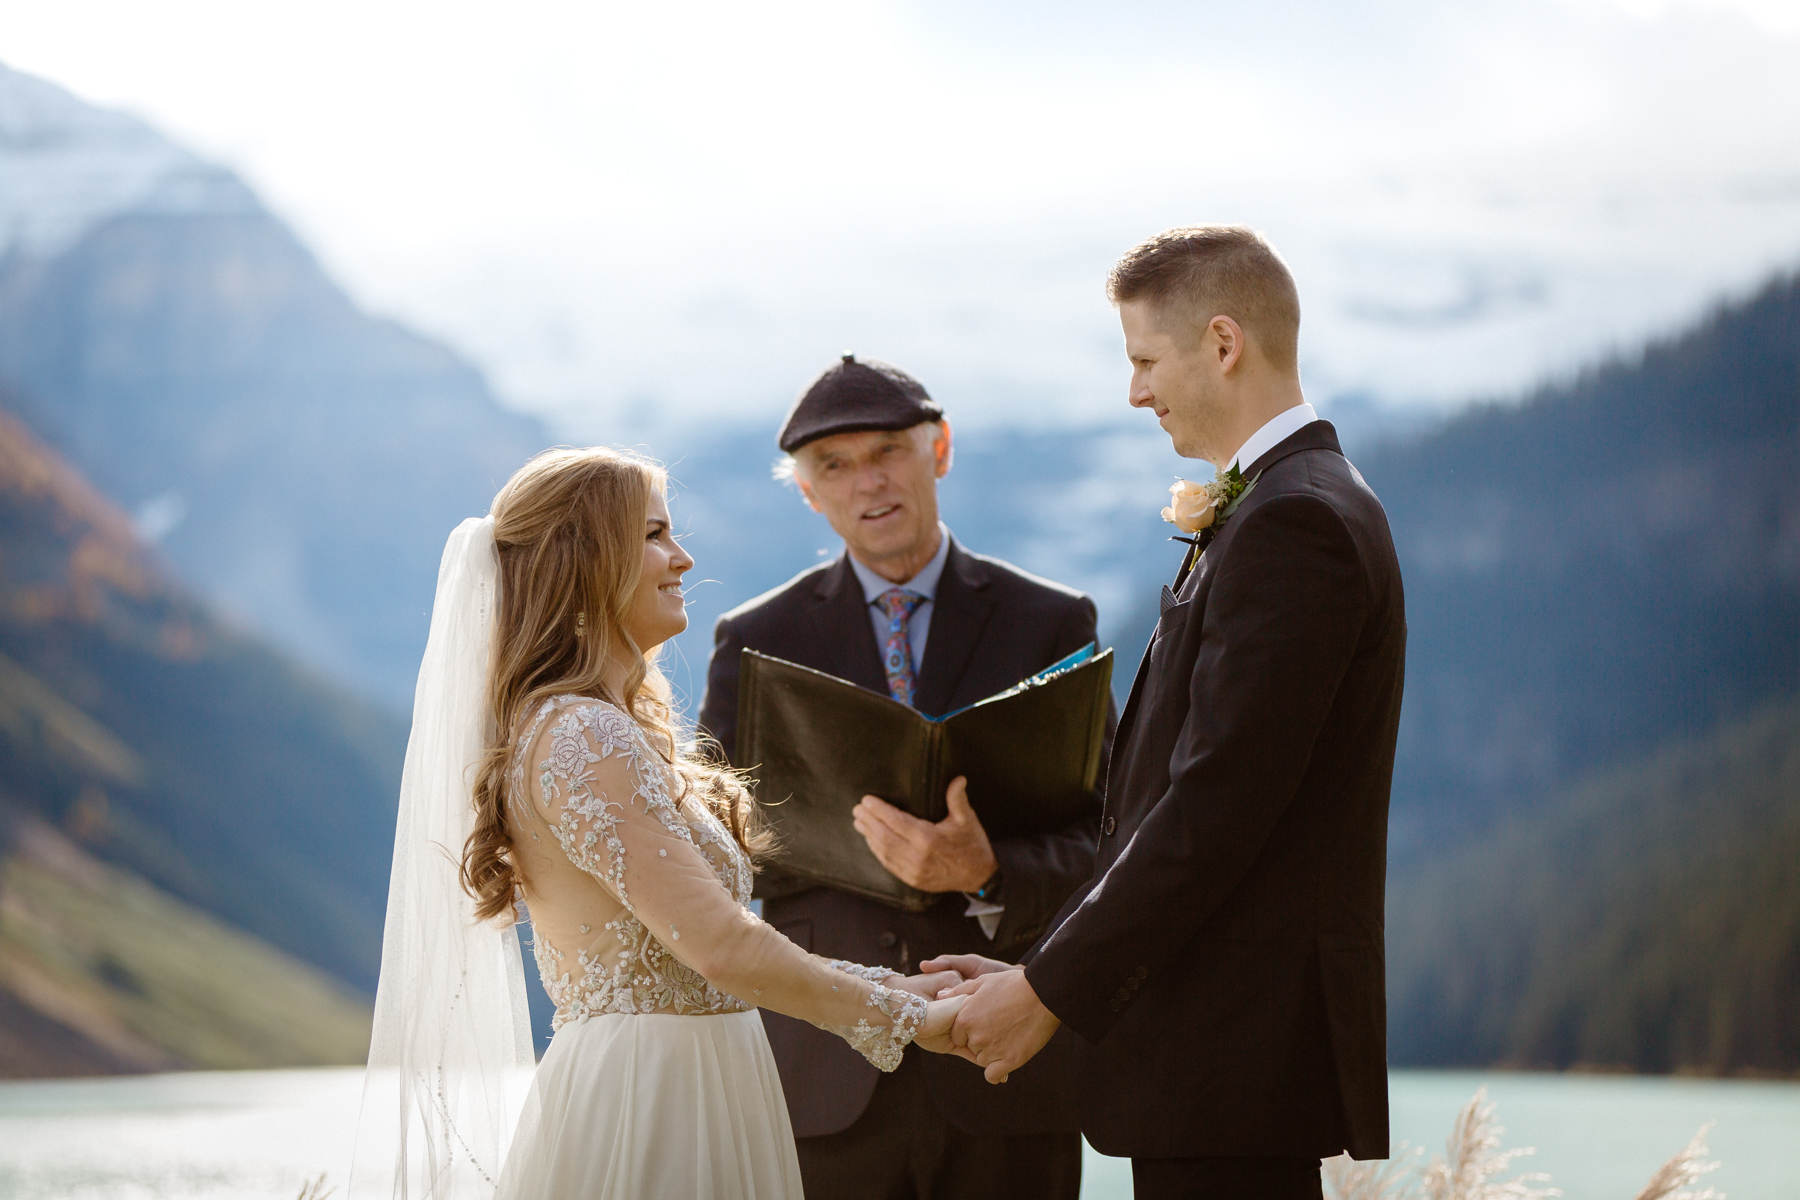 Moraine Lake wedding photos - Image 16